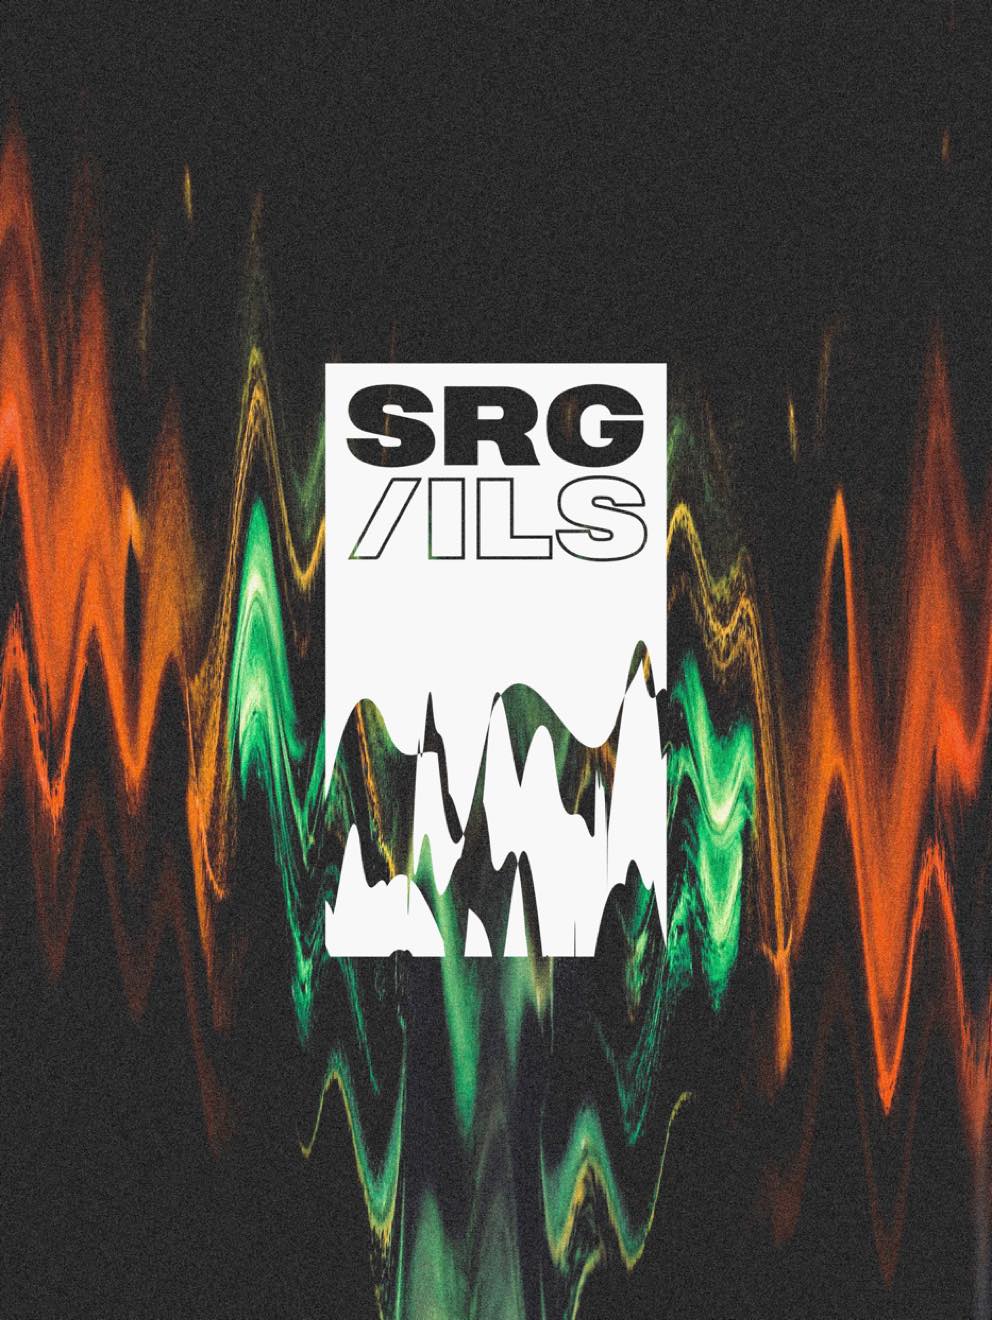 SRG / ILS